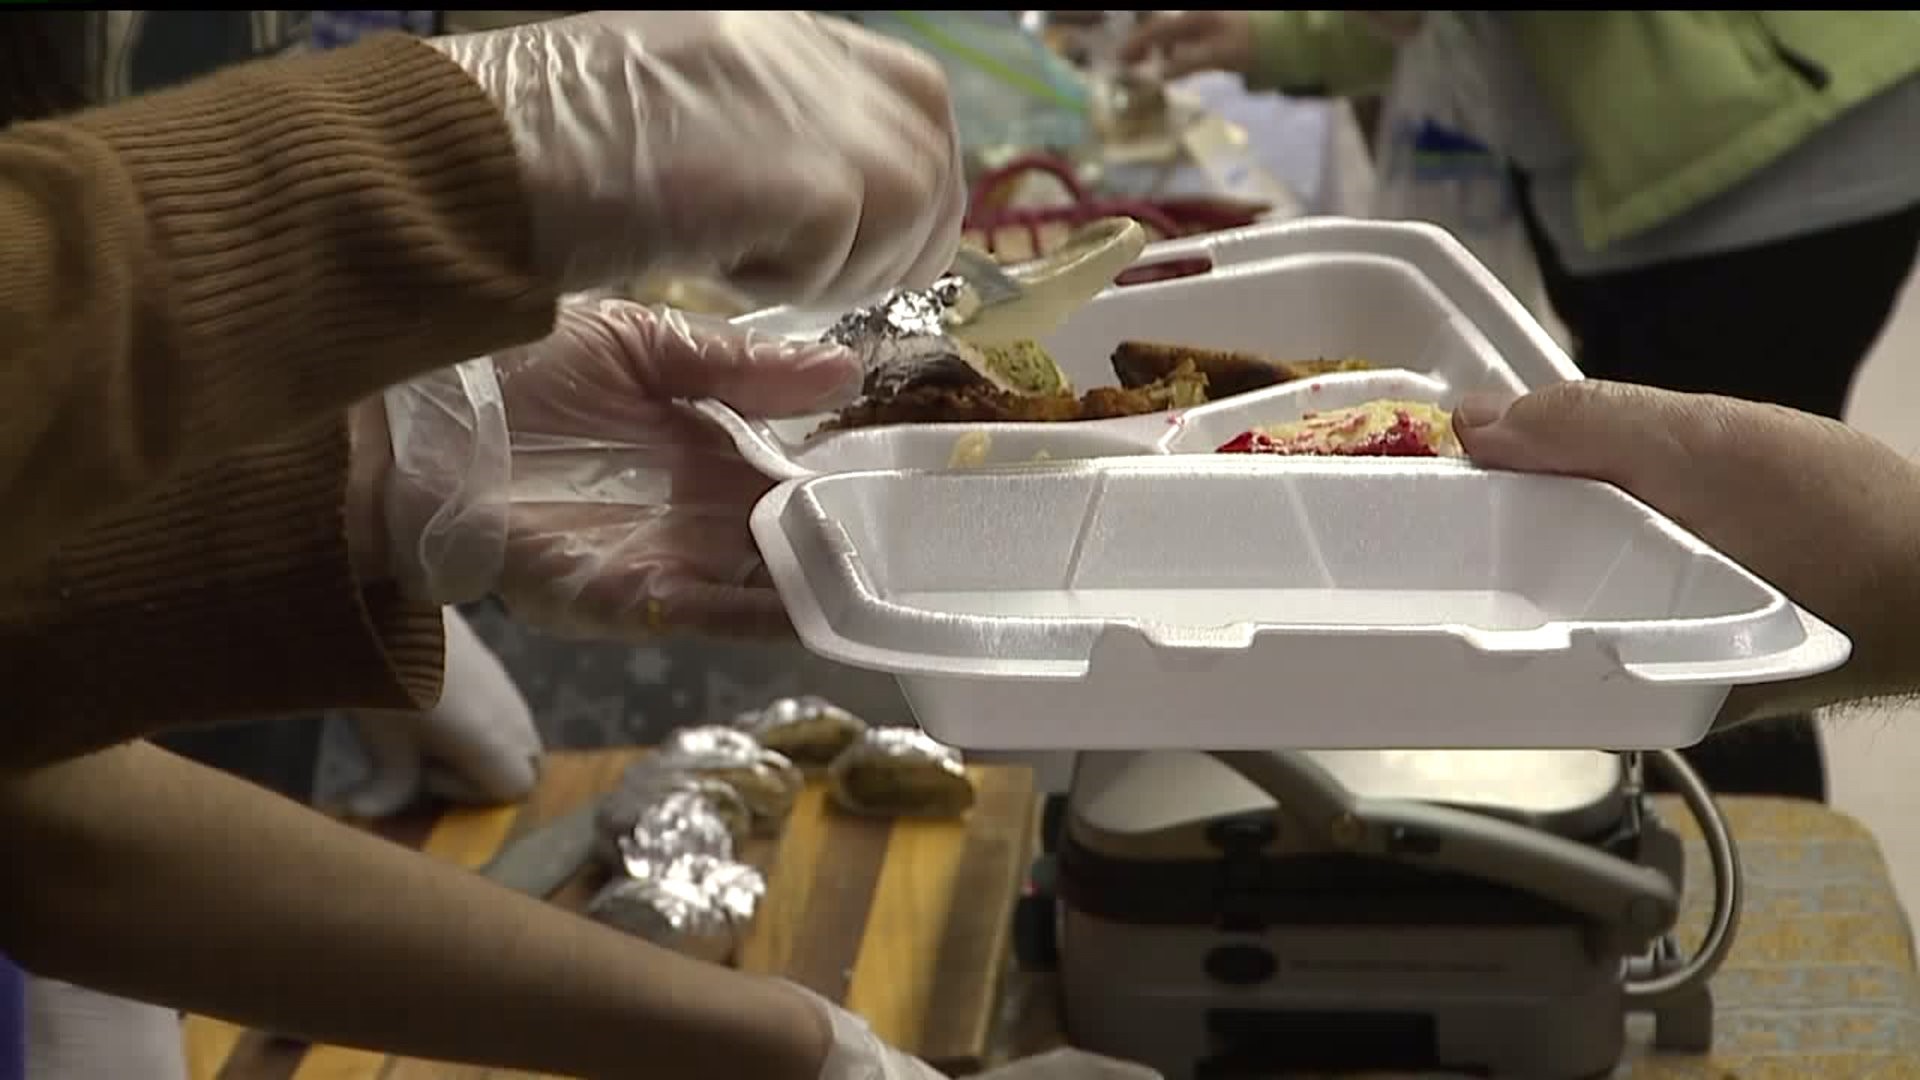 Food festival celebrates Jewish culture in Franklin County